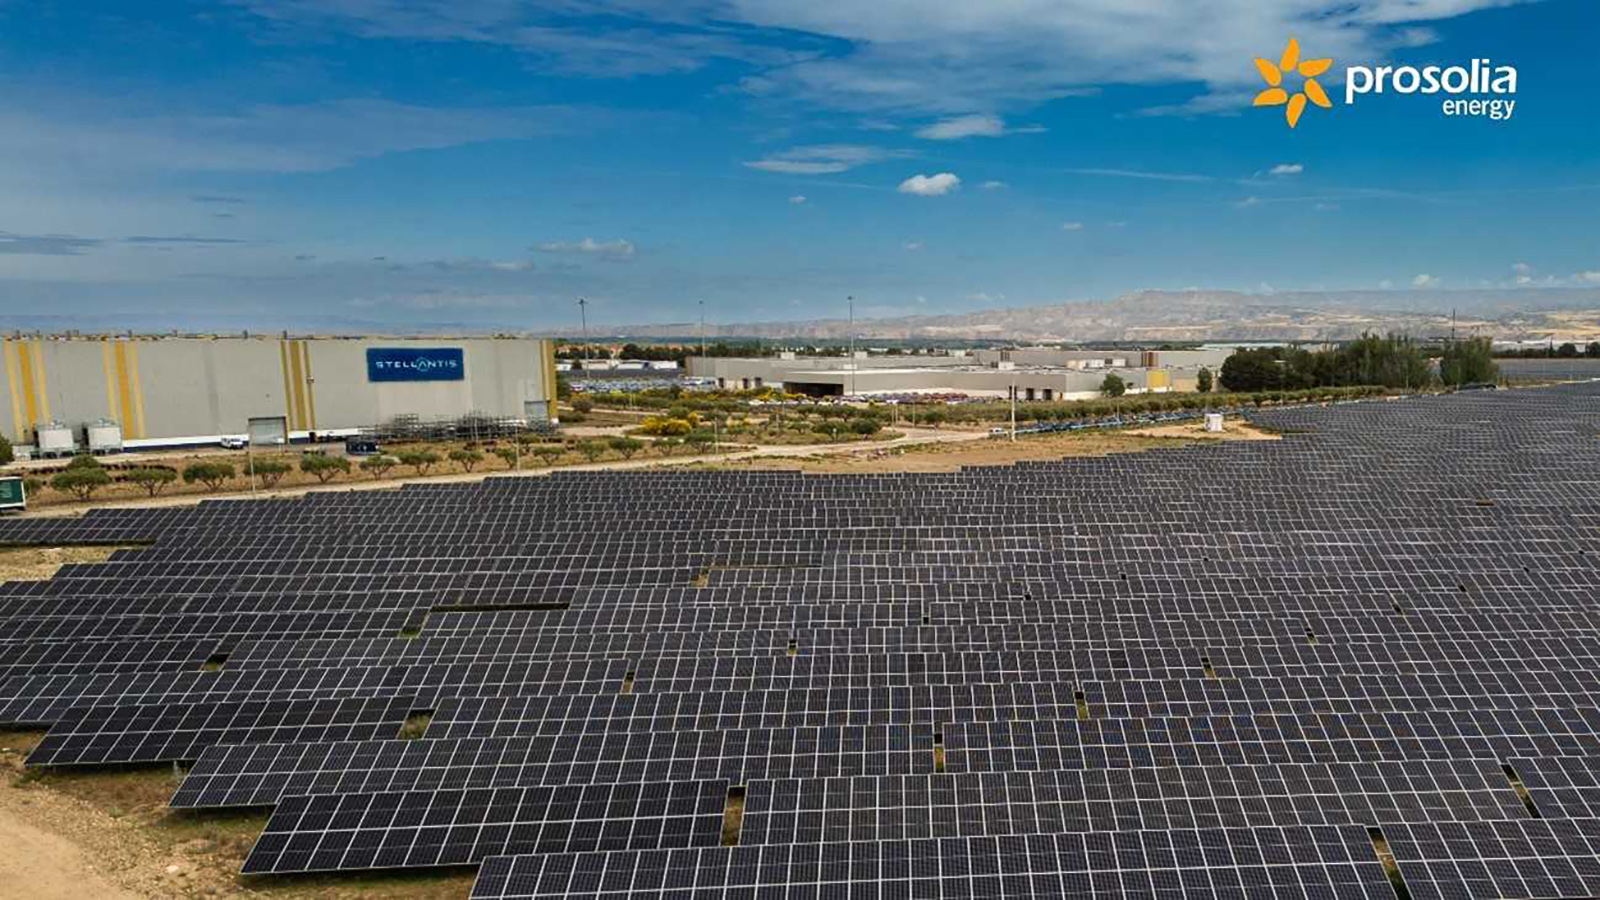 Instalaciones fotovoltaicas de Prosolia Energy.